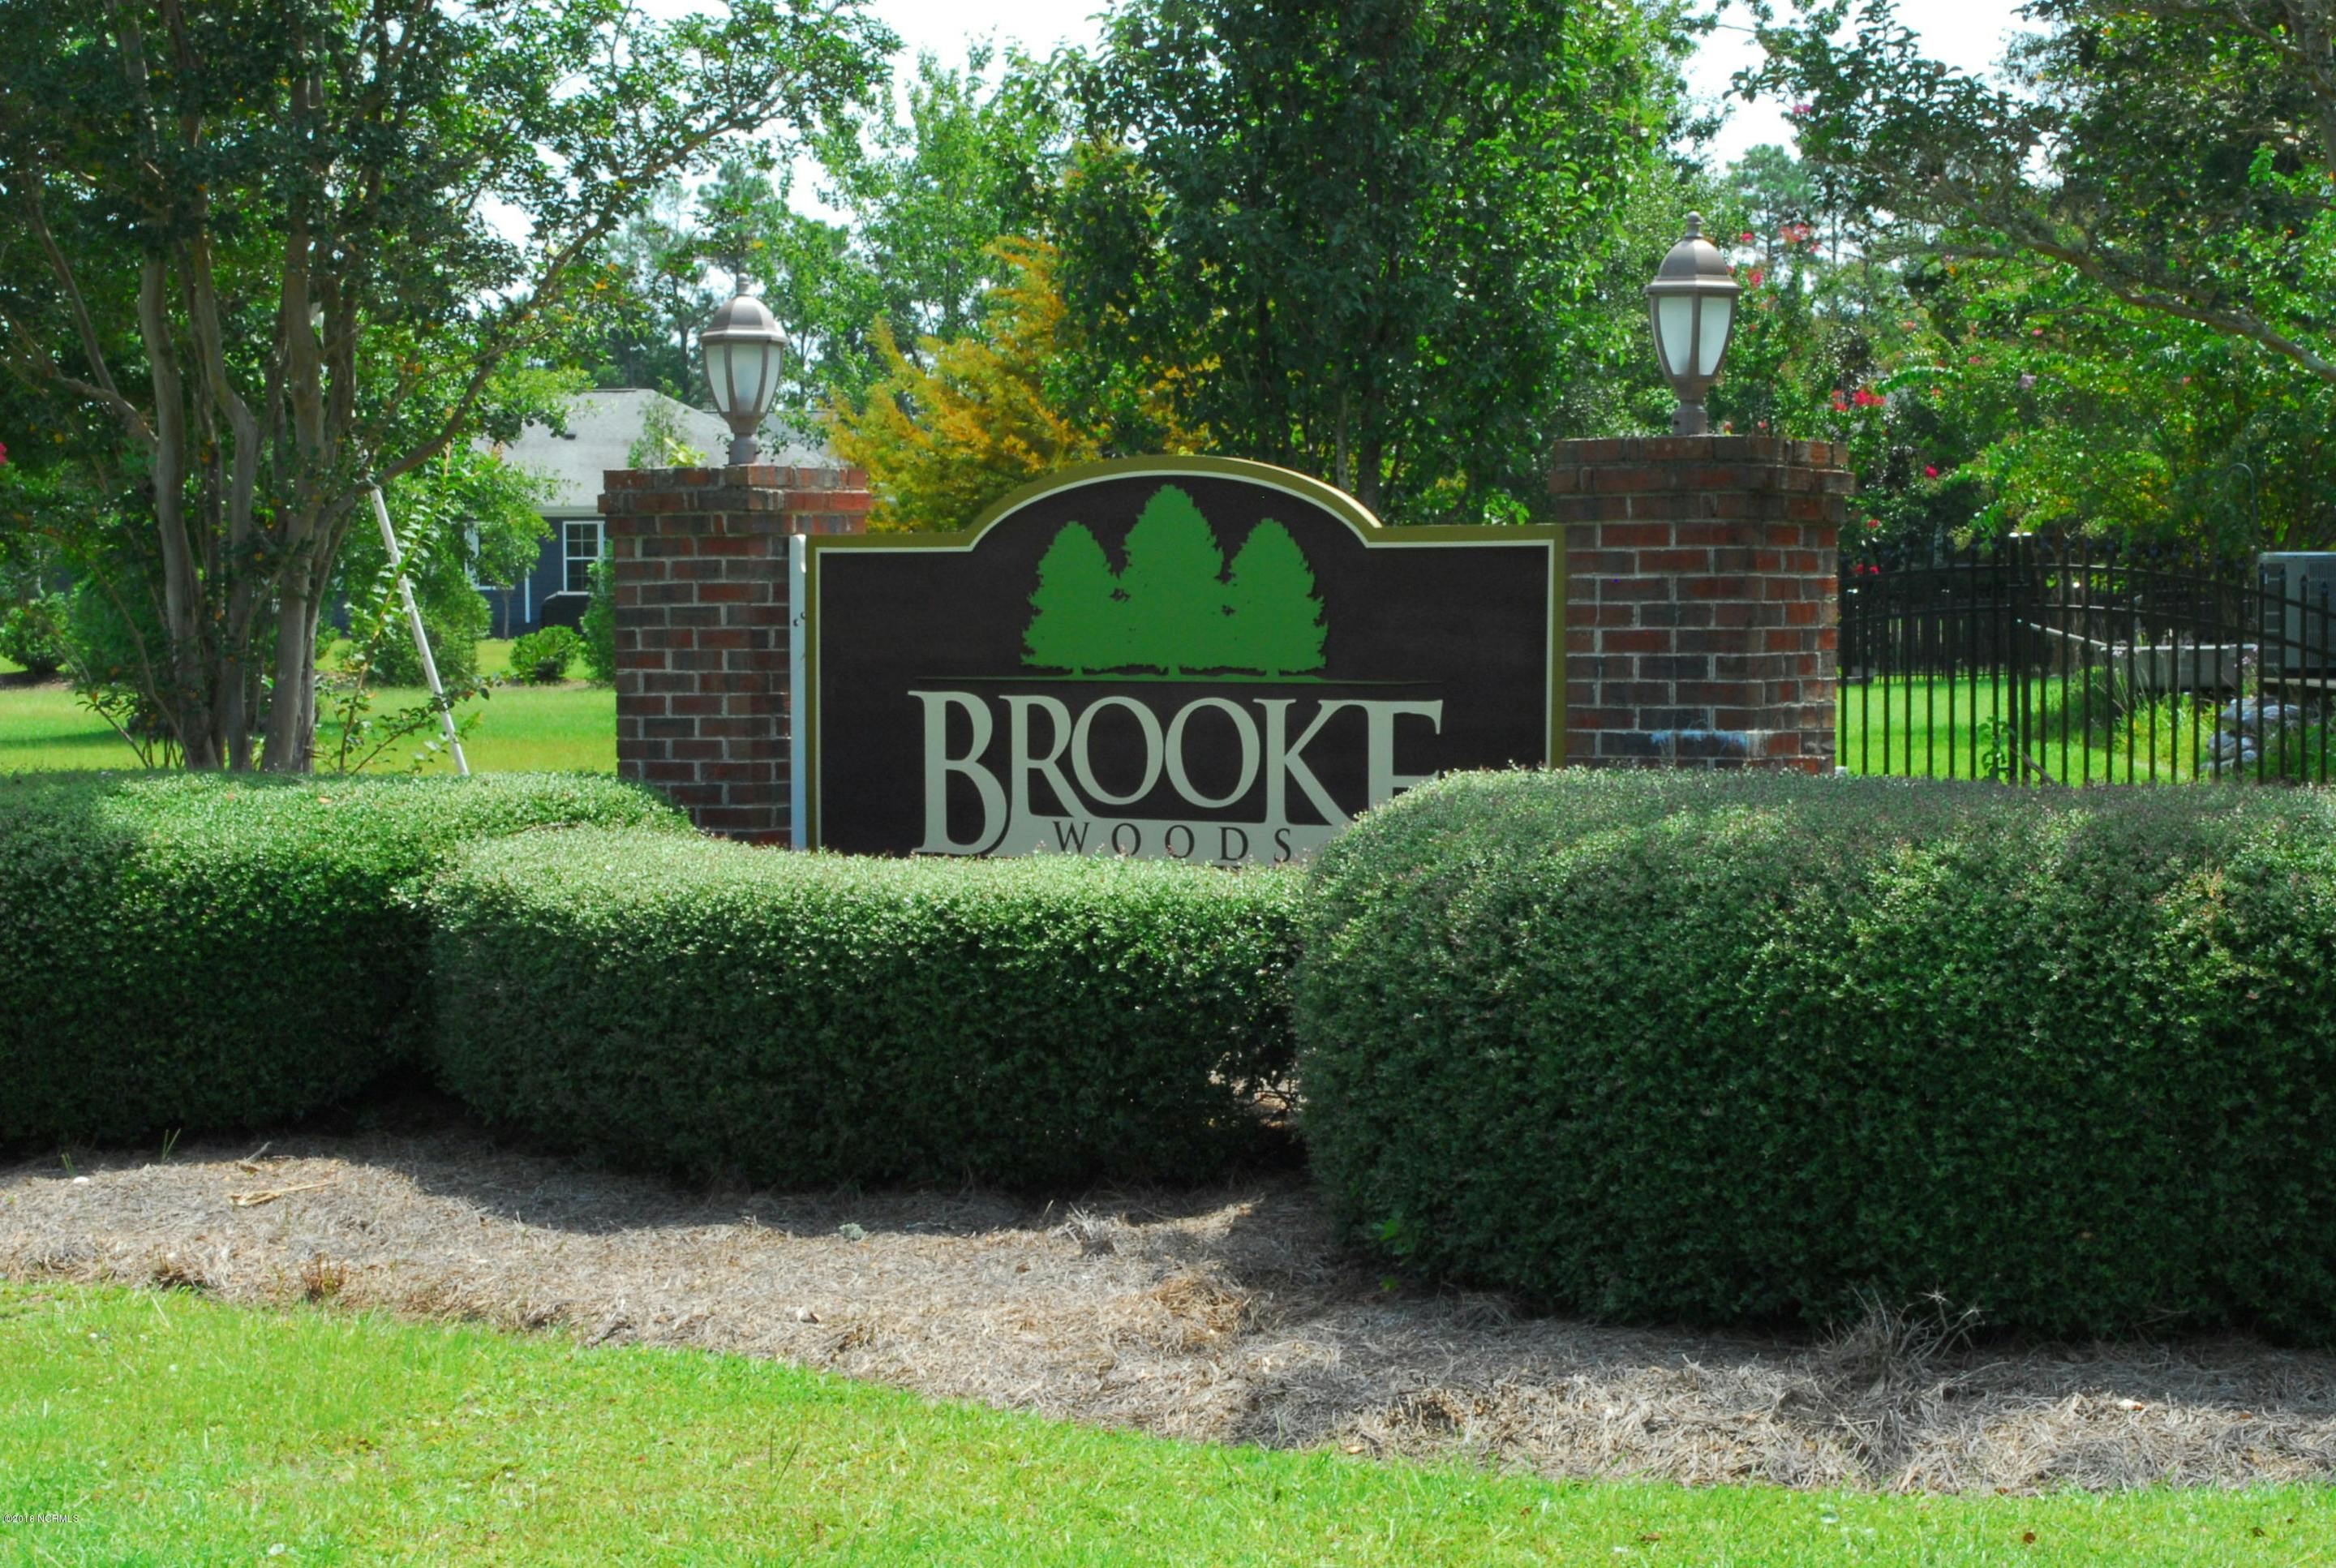 Brooke Woods - Entrance